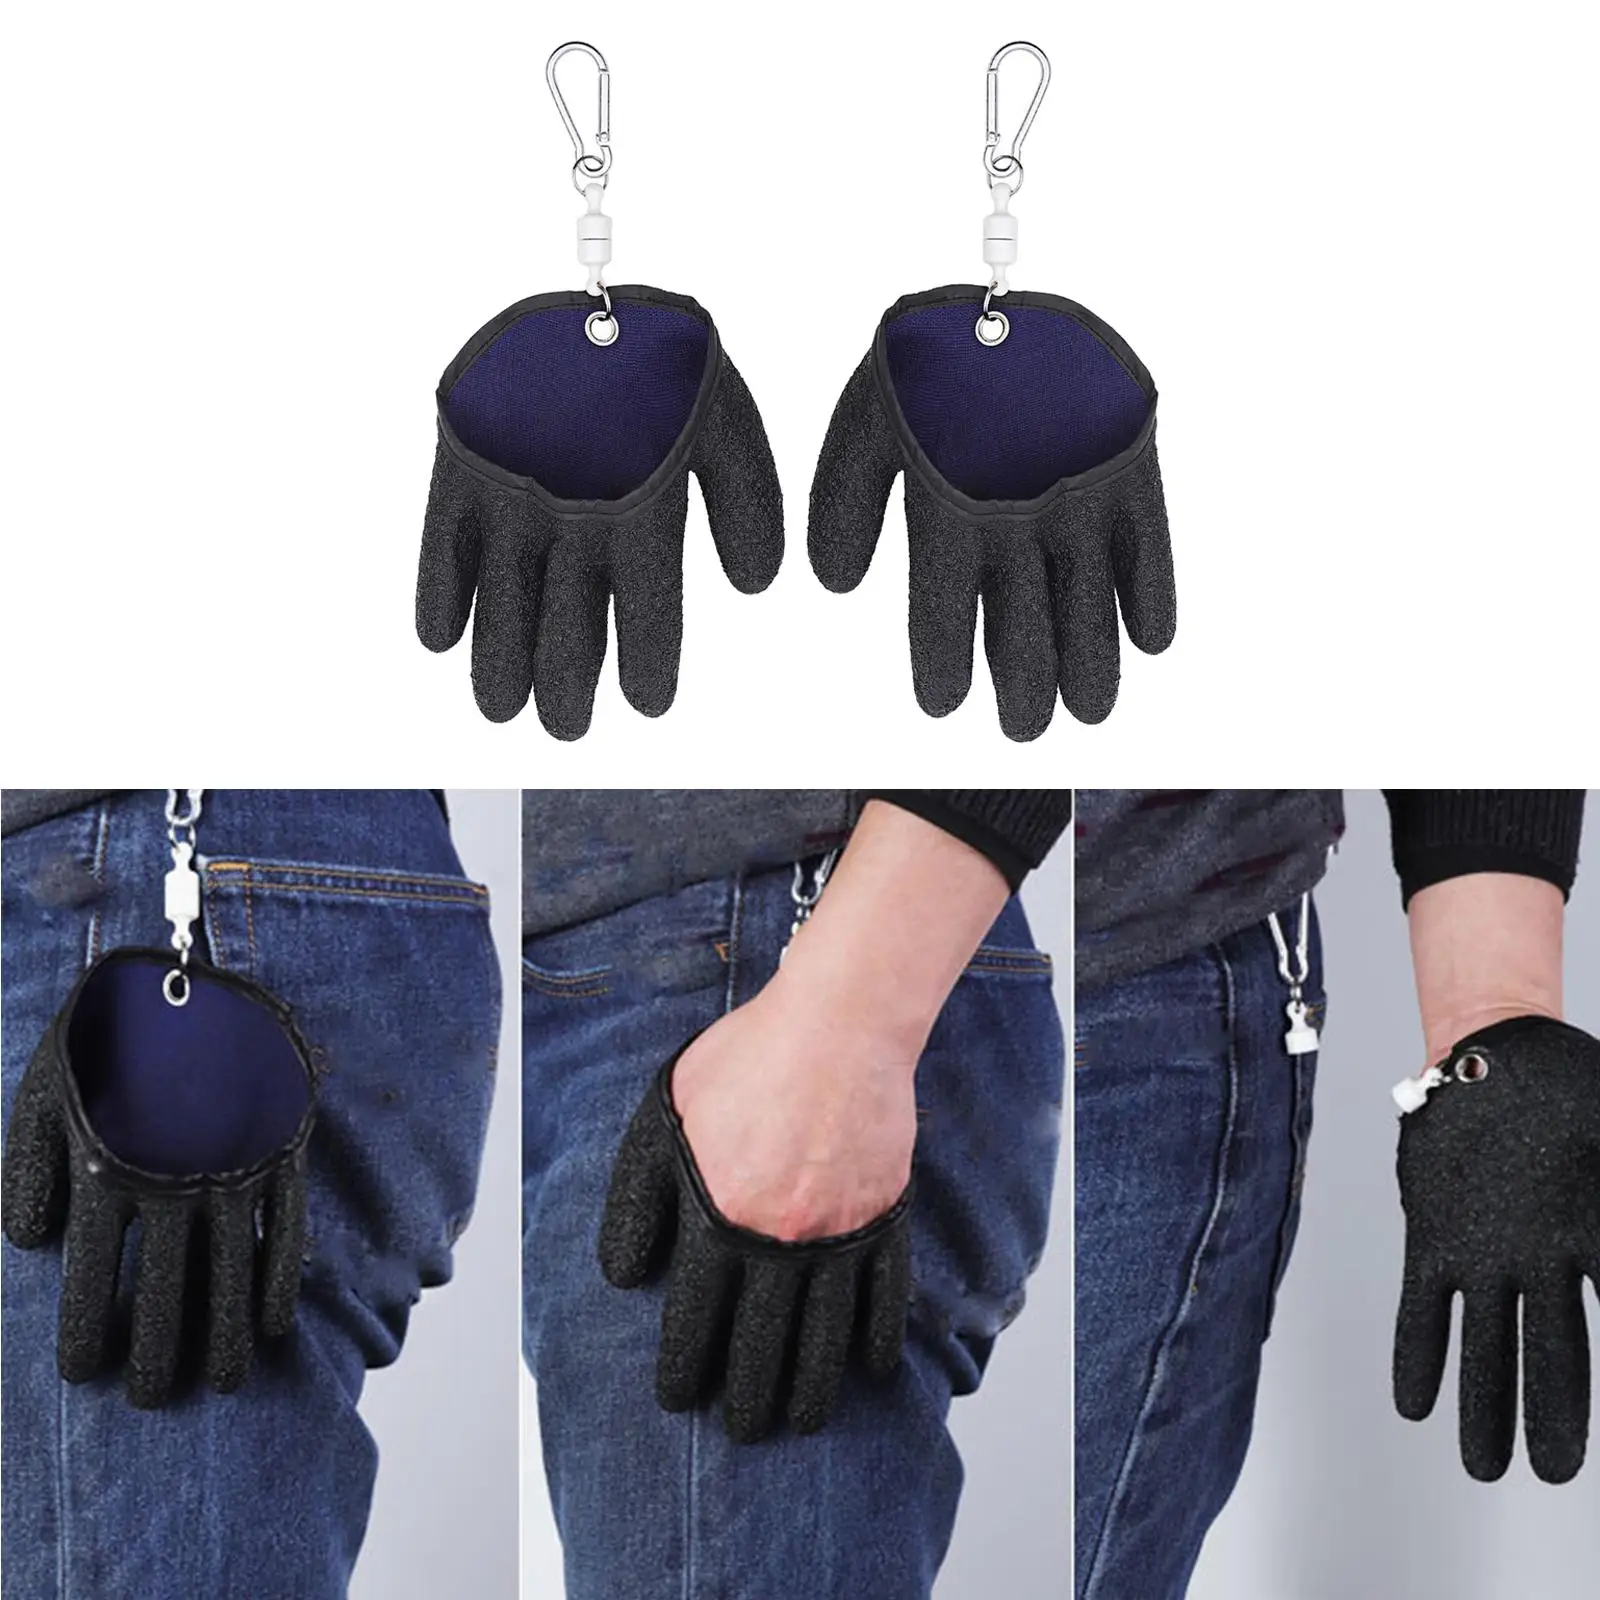 ing Puncture Proof Gloves w/ Magnet Release Waterproof  Landing Glove